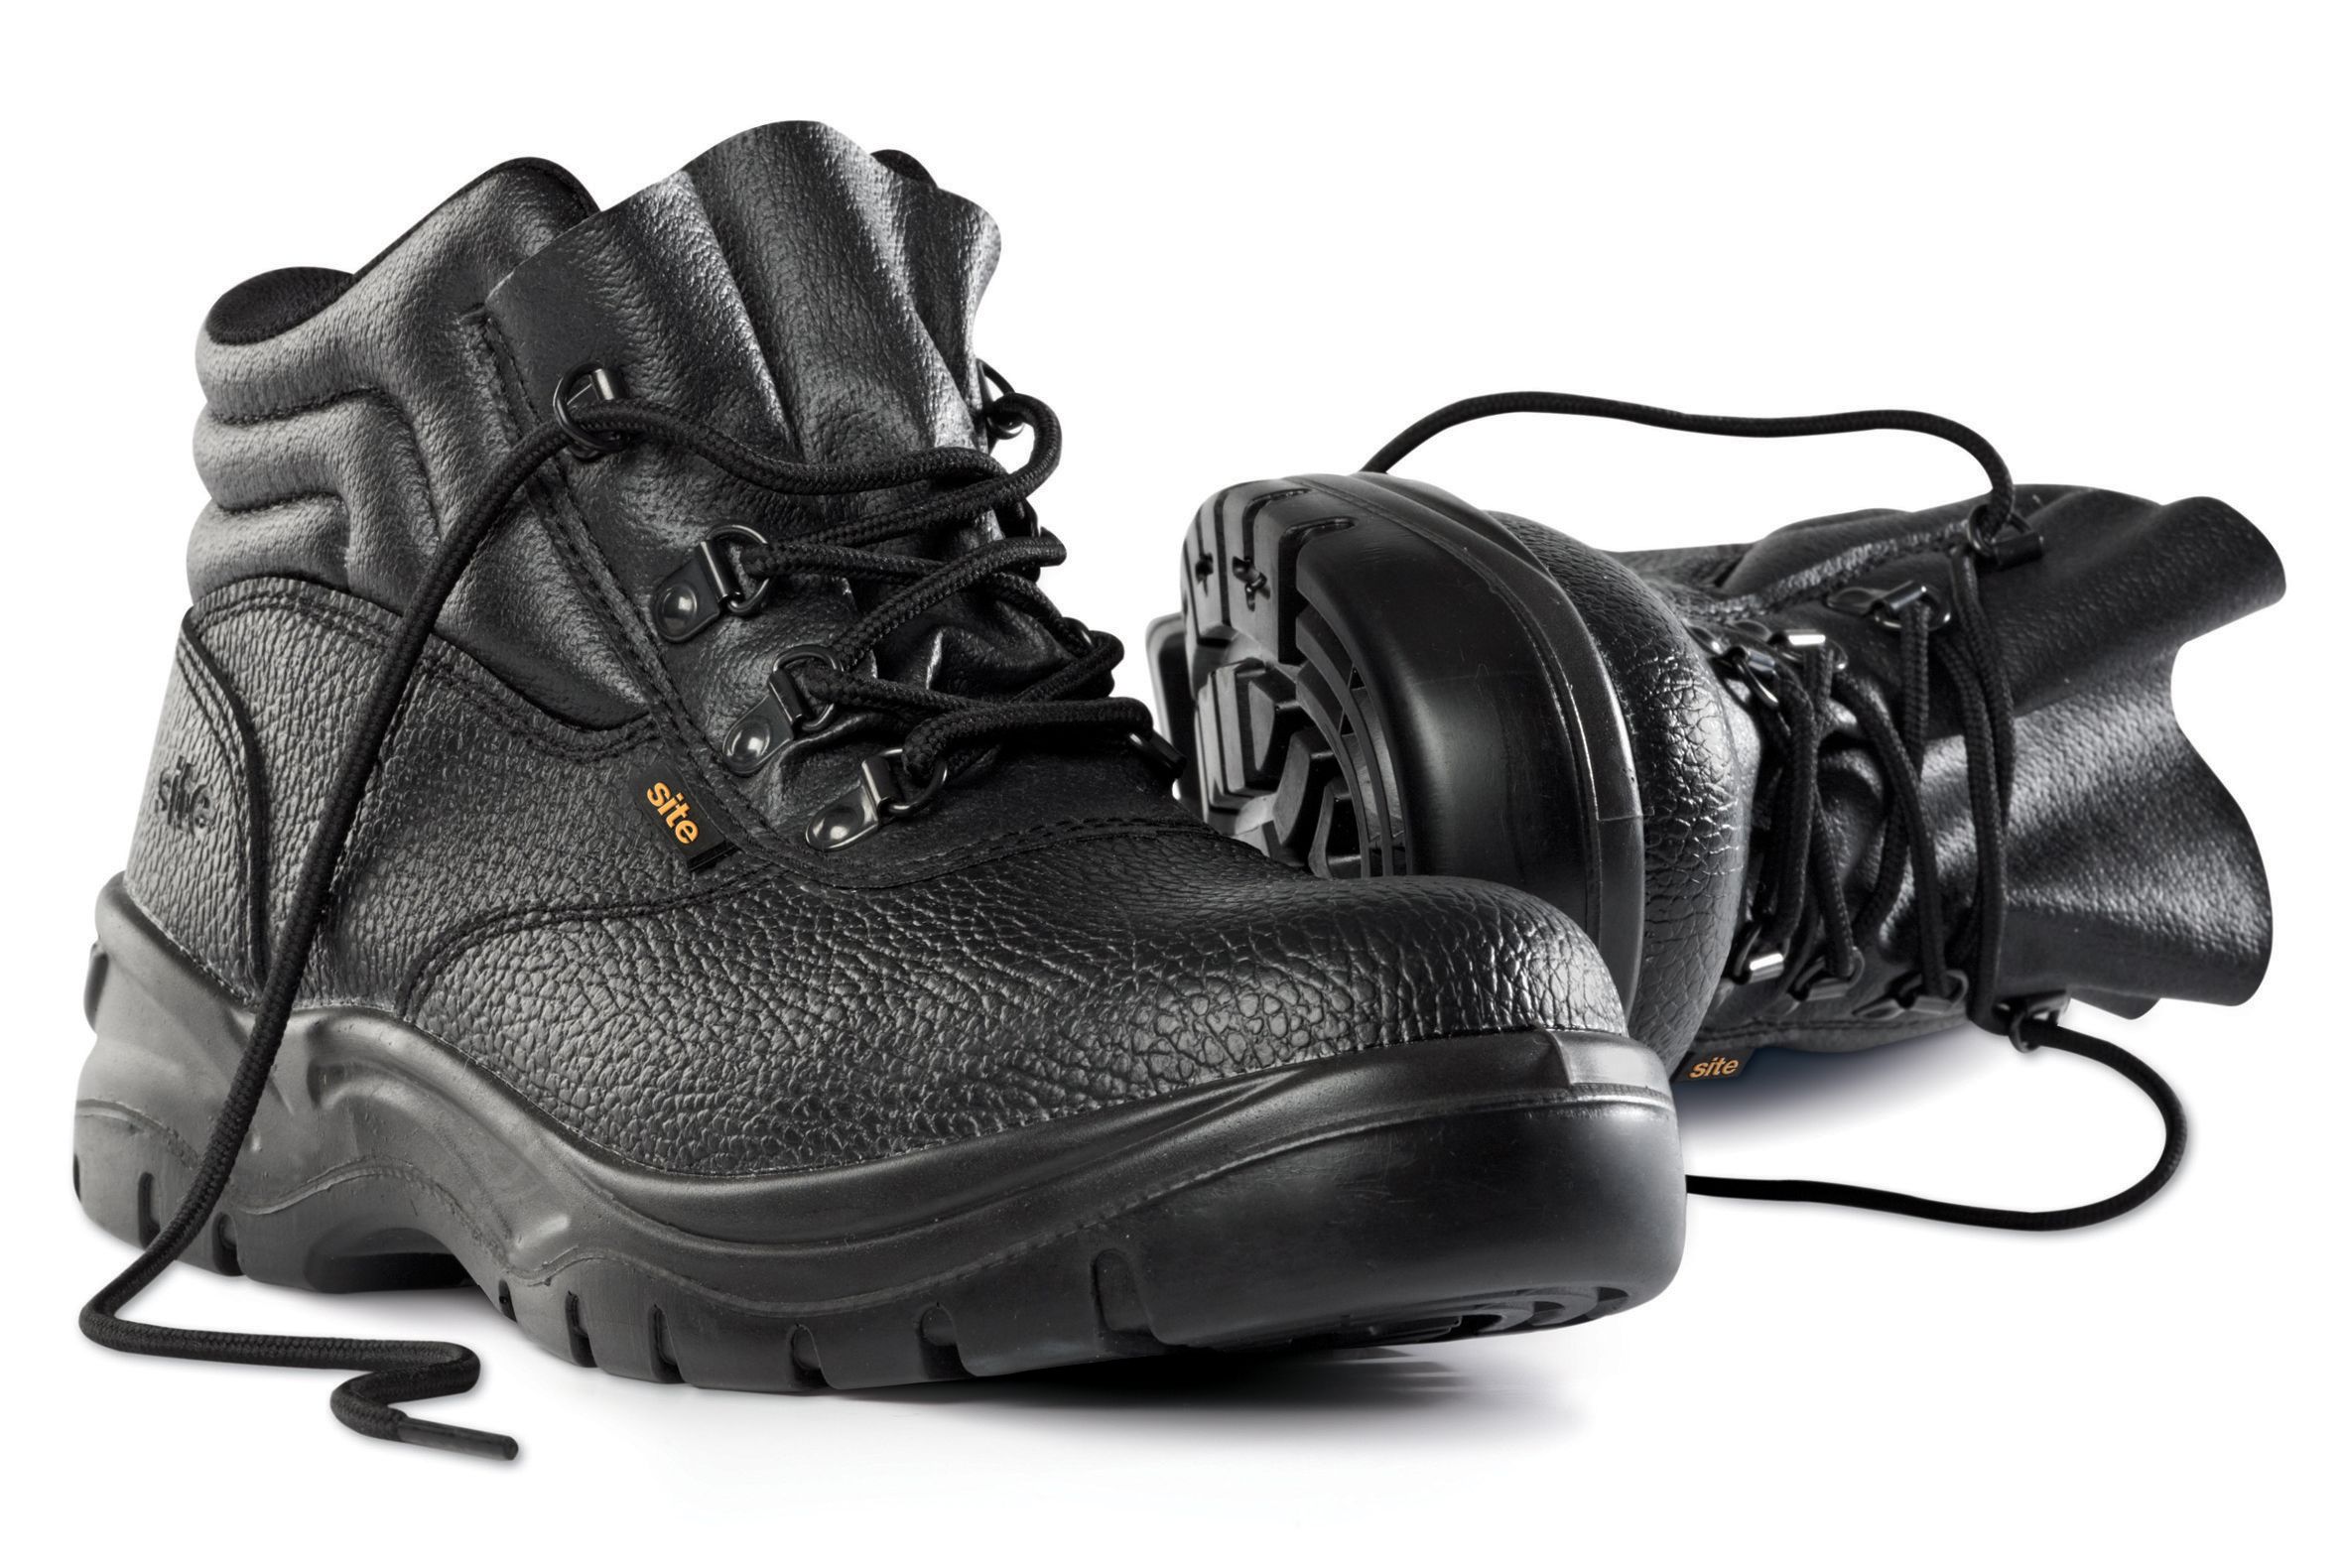 Site Slate Men's Black Chukka boot, Size 8